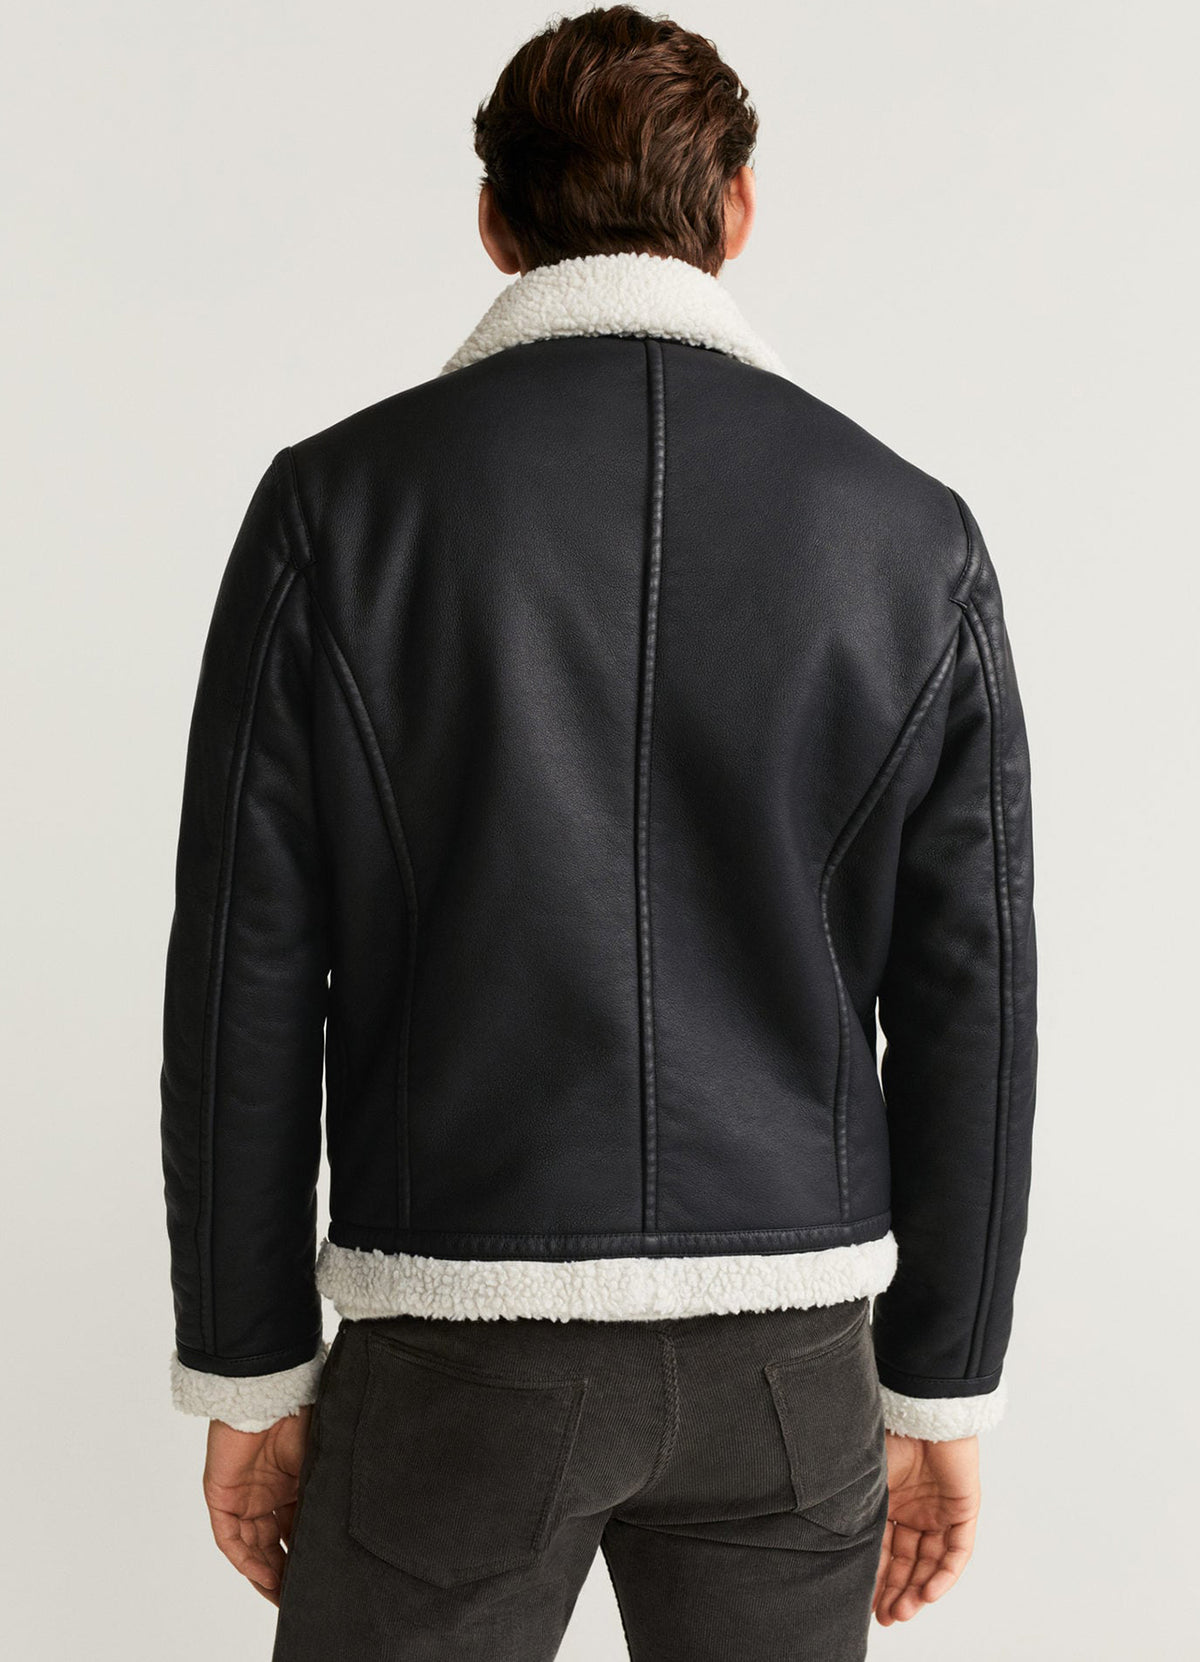 Mens Classic Black Shearling Leather Jacket | Elite Jacket